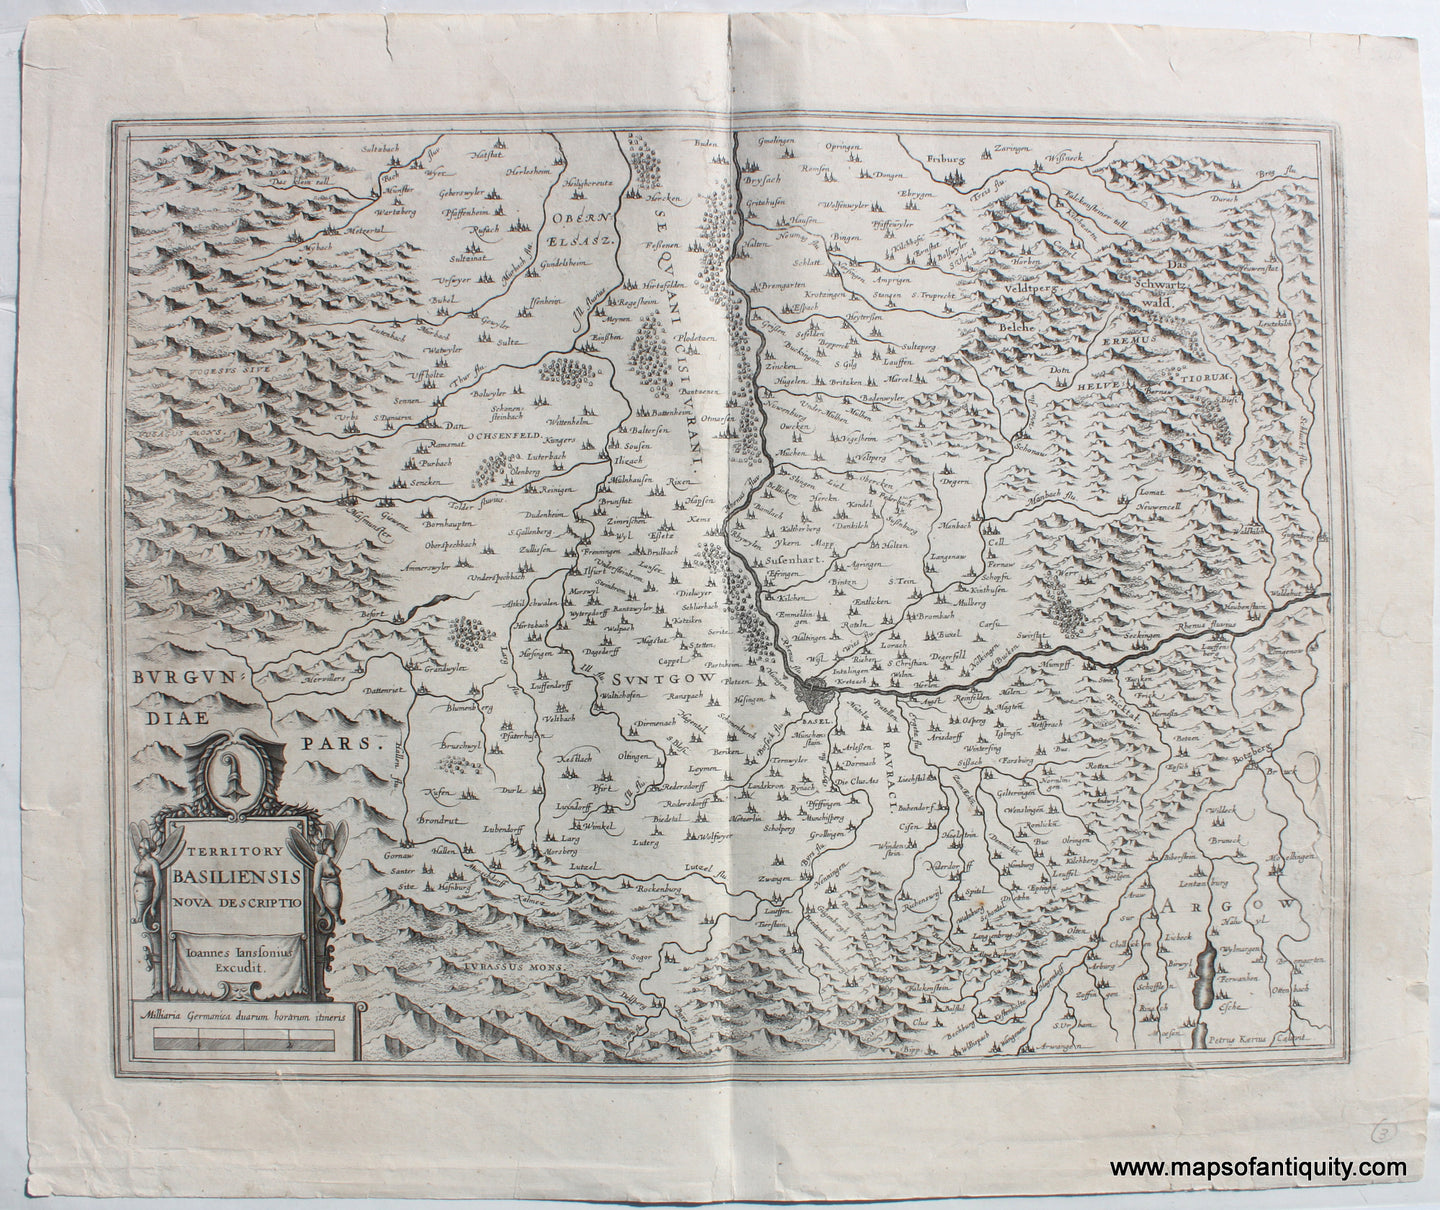 Black-and-White-Antique-Map-Territory-Basiliensis-Nova-Descrptio/Basel-Switzerland-Switzerland--c.-1650-Jansson-Maps-Of-Antiquity